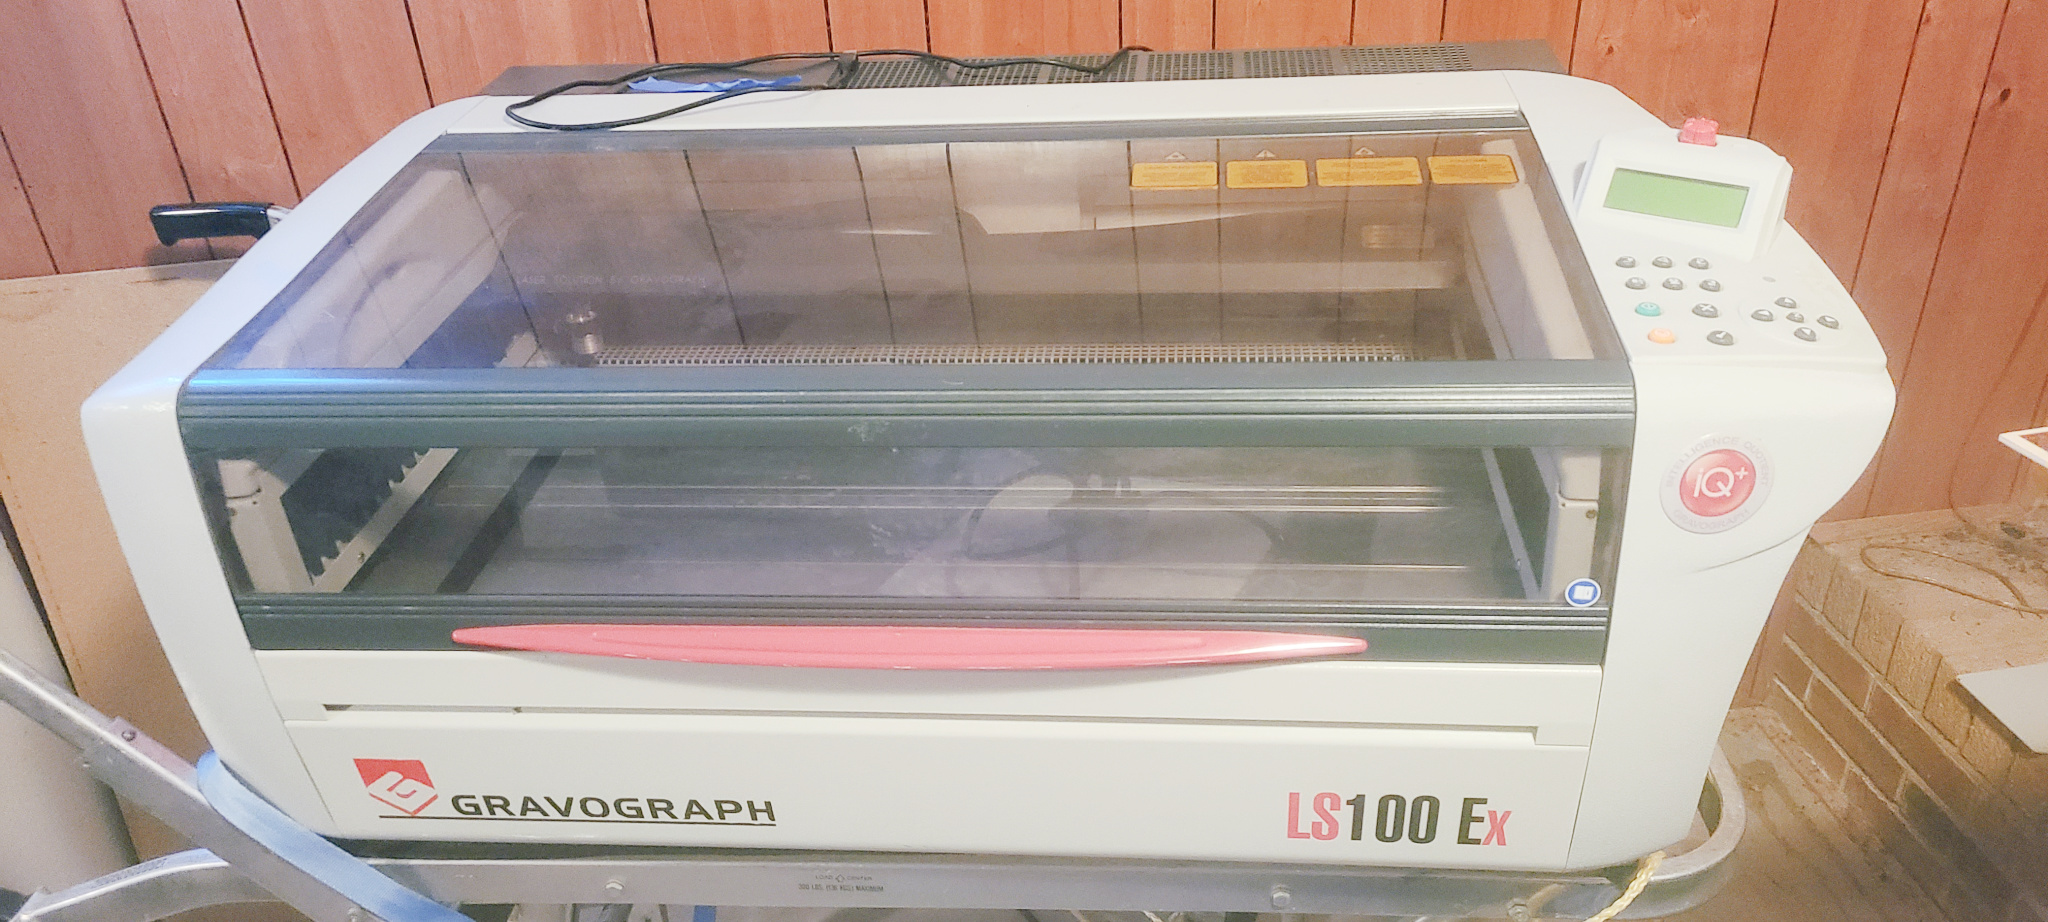 Gravograph LS100EX Engraver (used) Item # UE-102122A